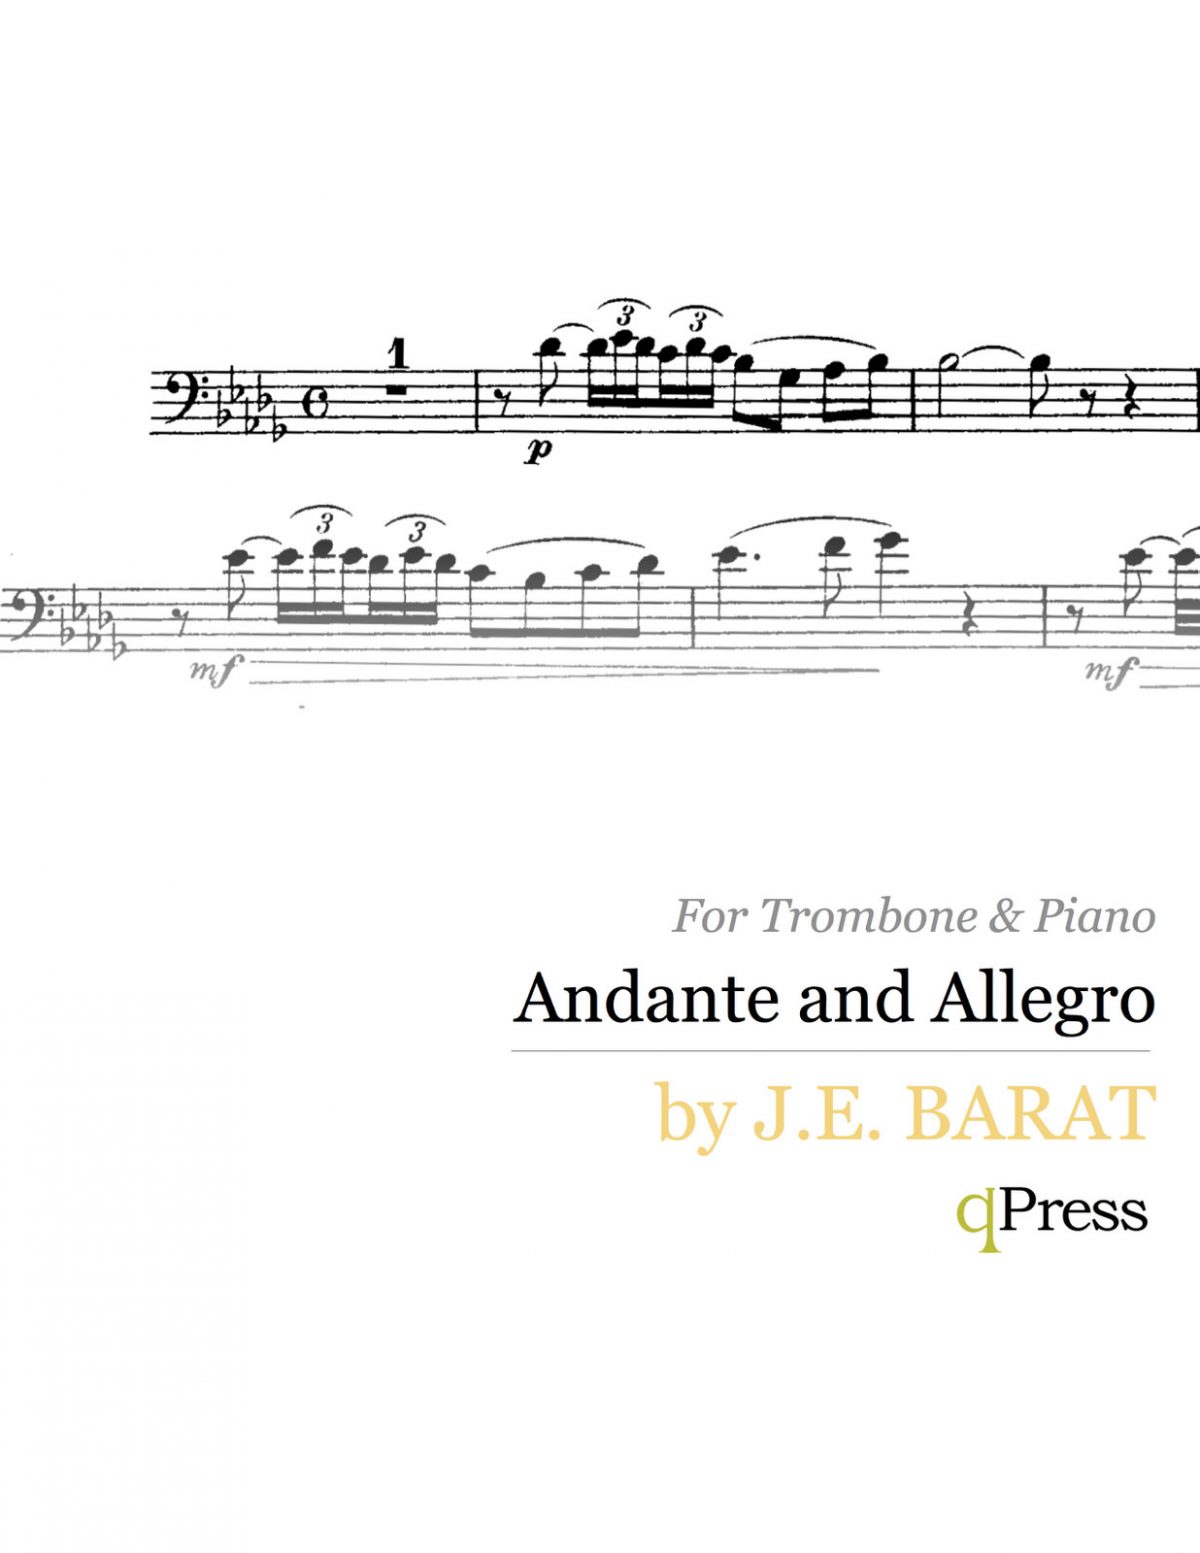 Barat, Andante and Allegro